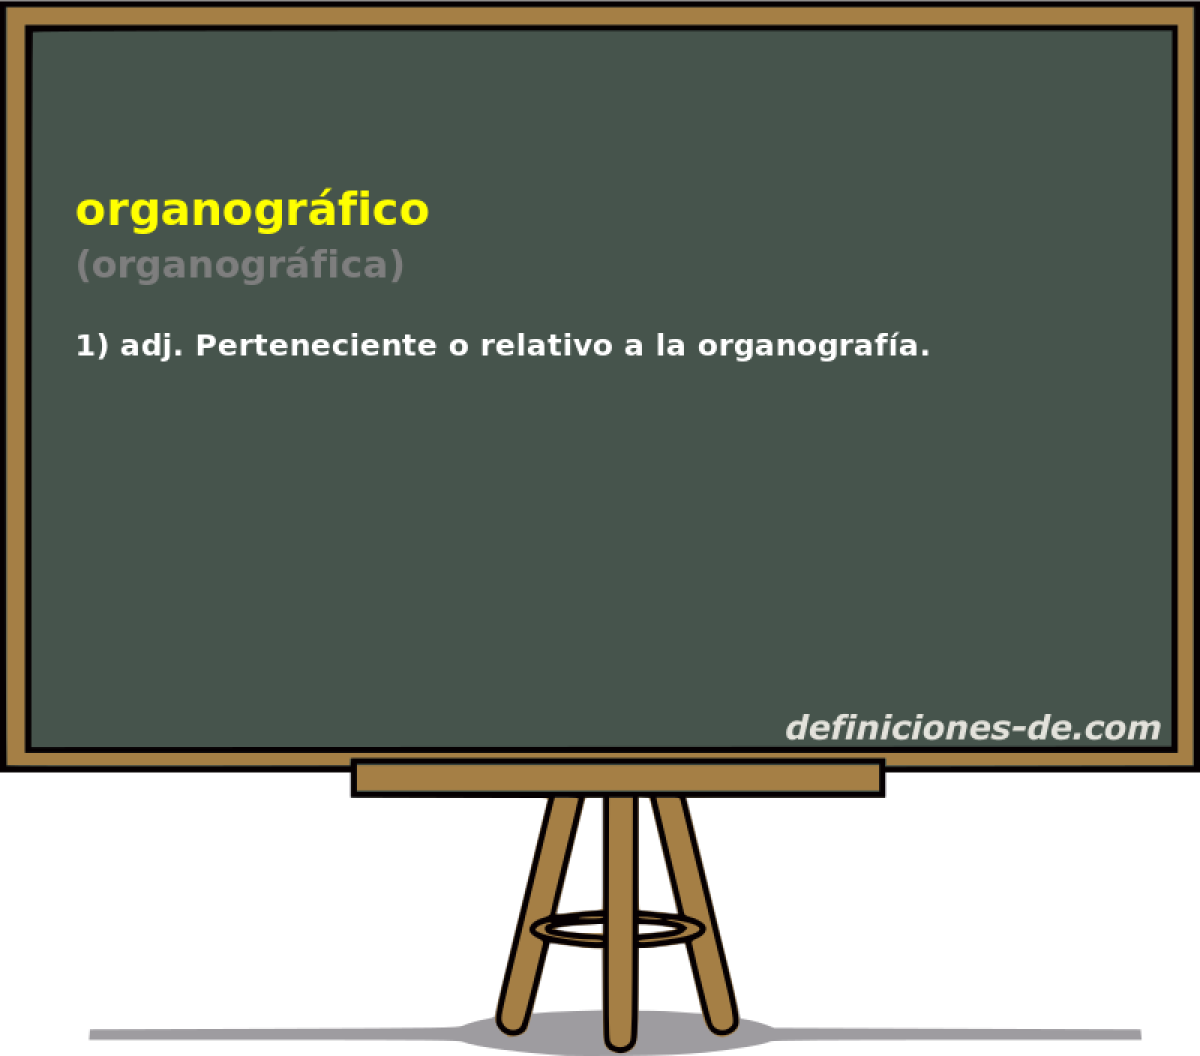 organogrfico (organogrfica)